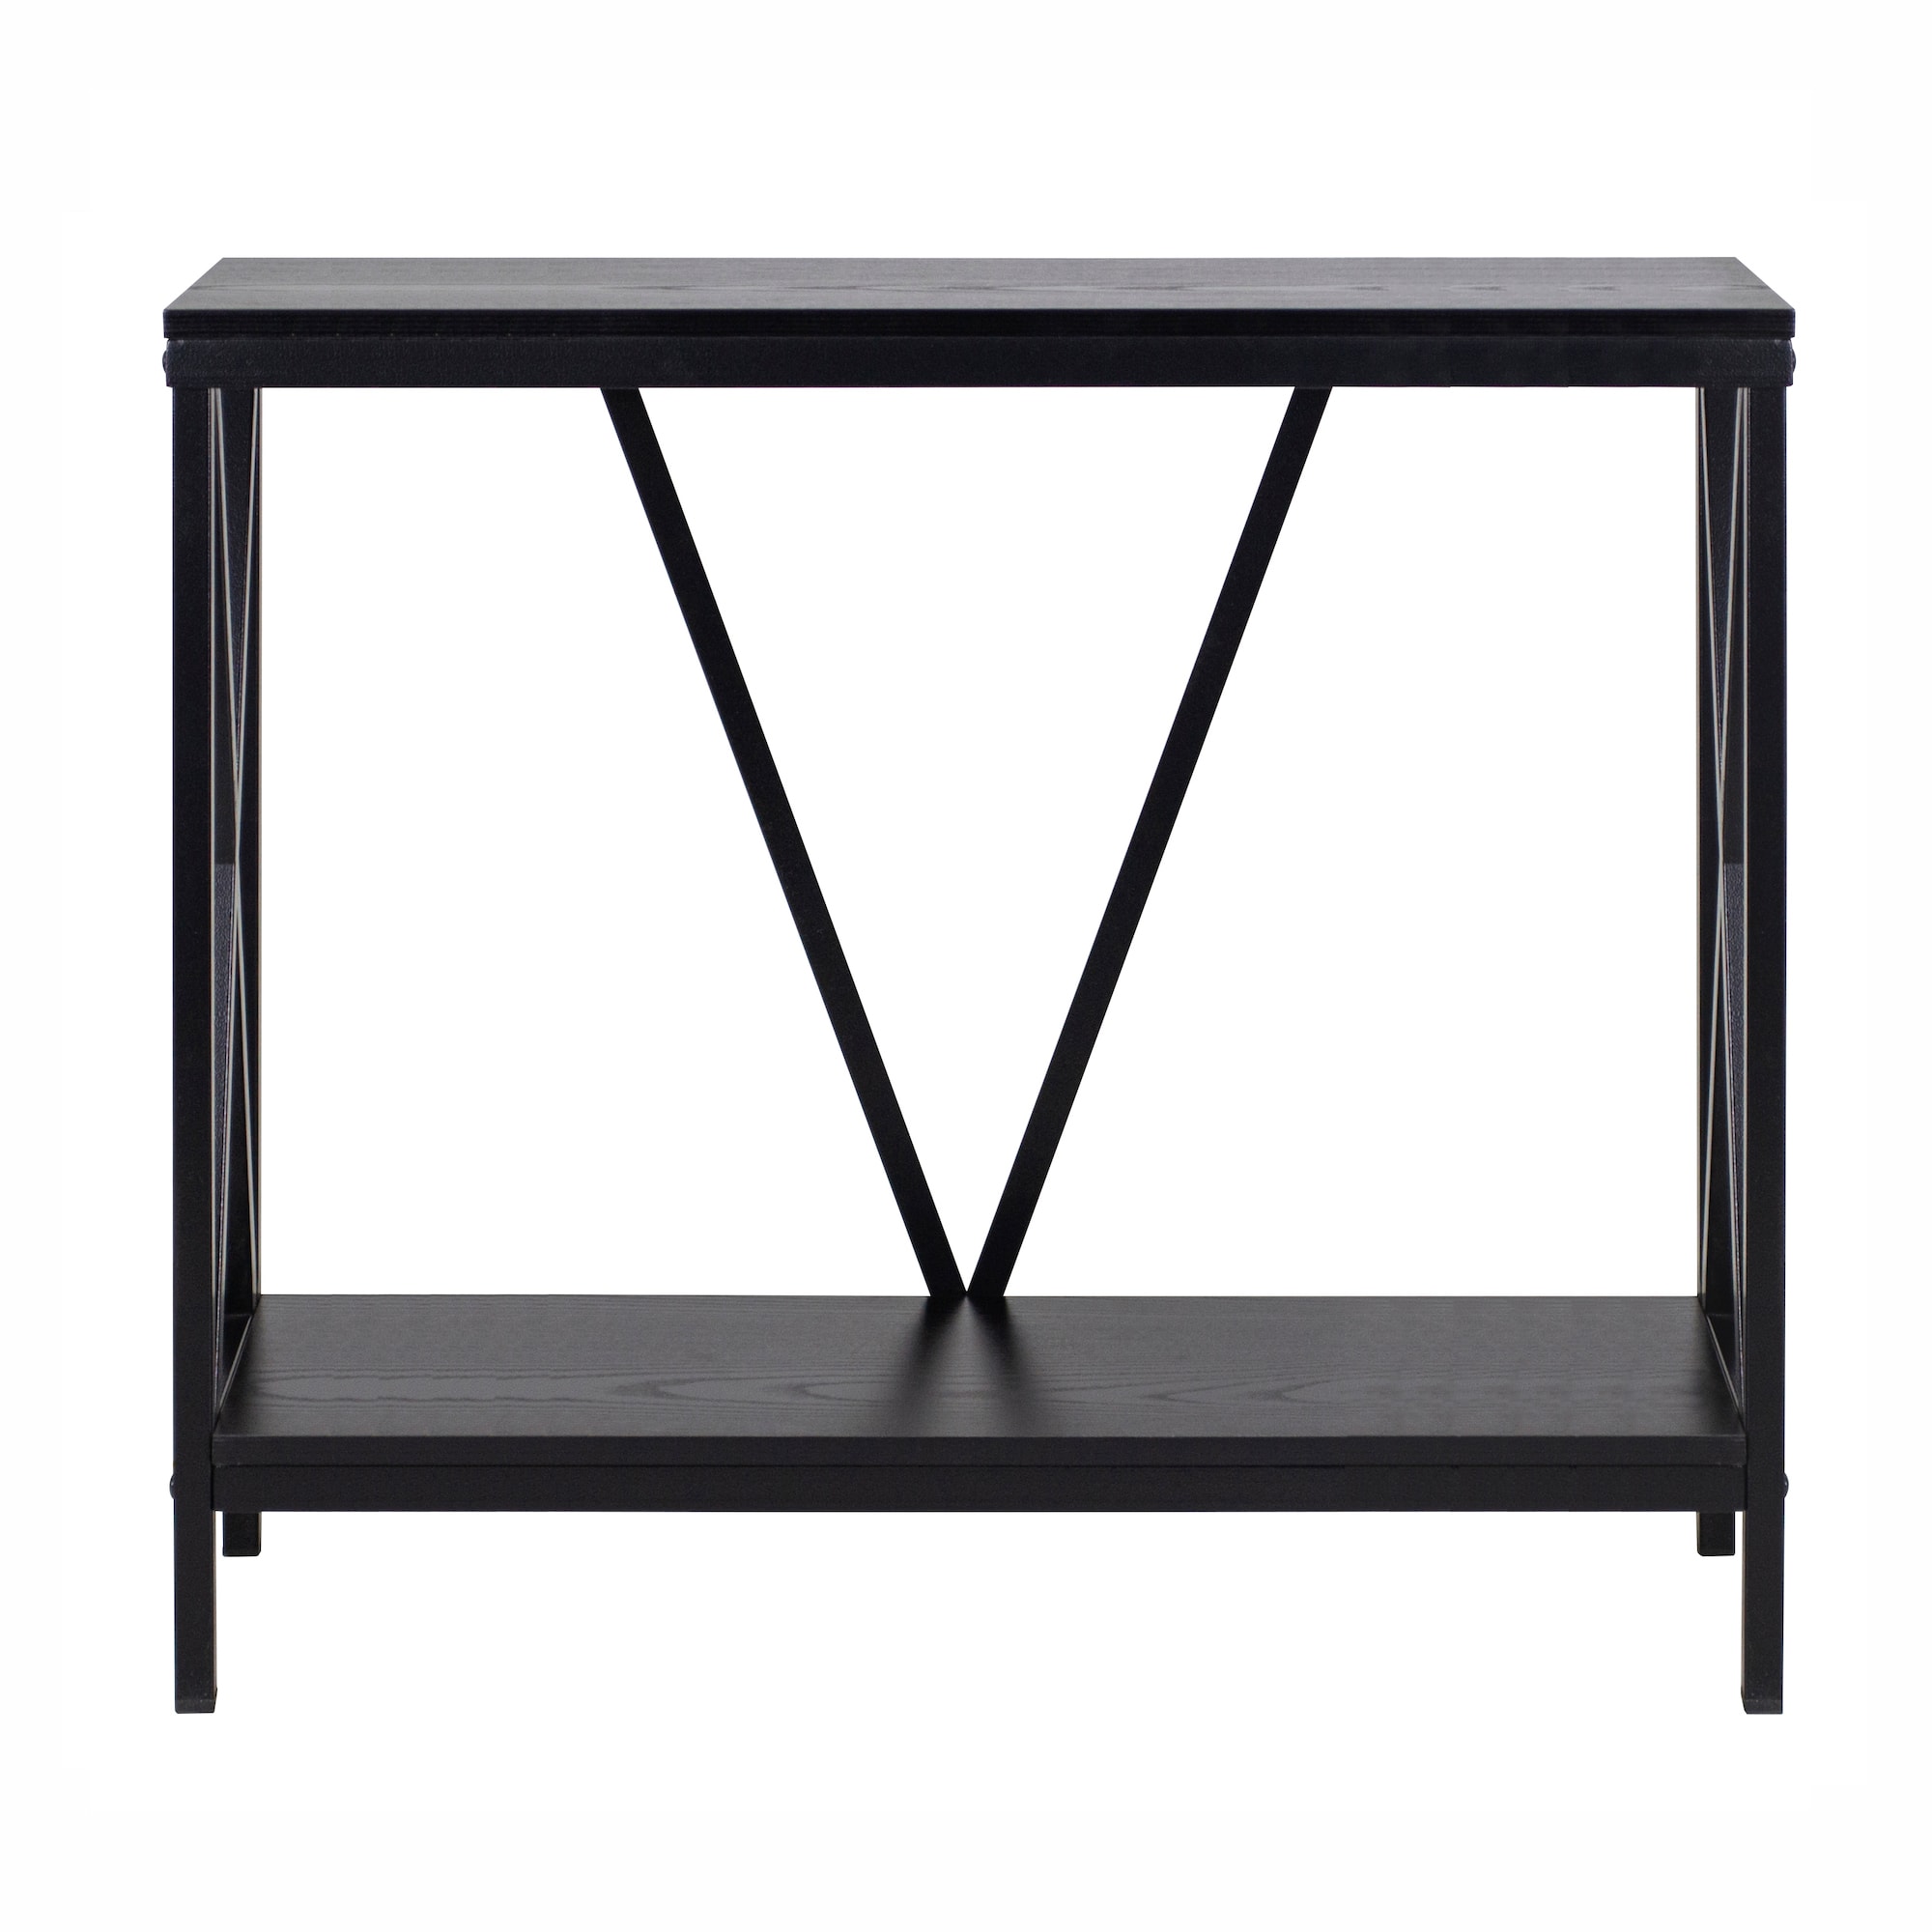 Black Price stand L - 5 pieces Size: A7 Colour: black Dimension: 7,4 x 10,5  x 4,5 cm Quantity in package: 5